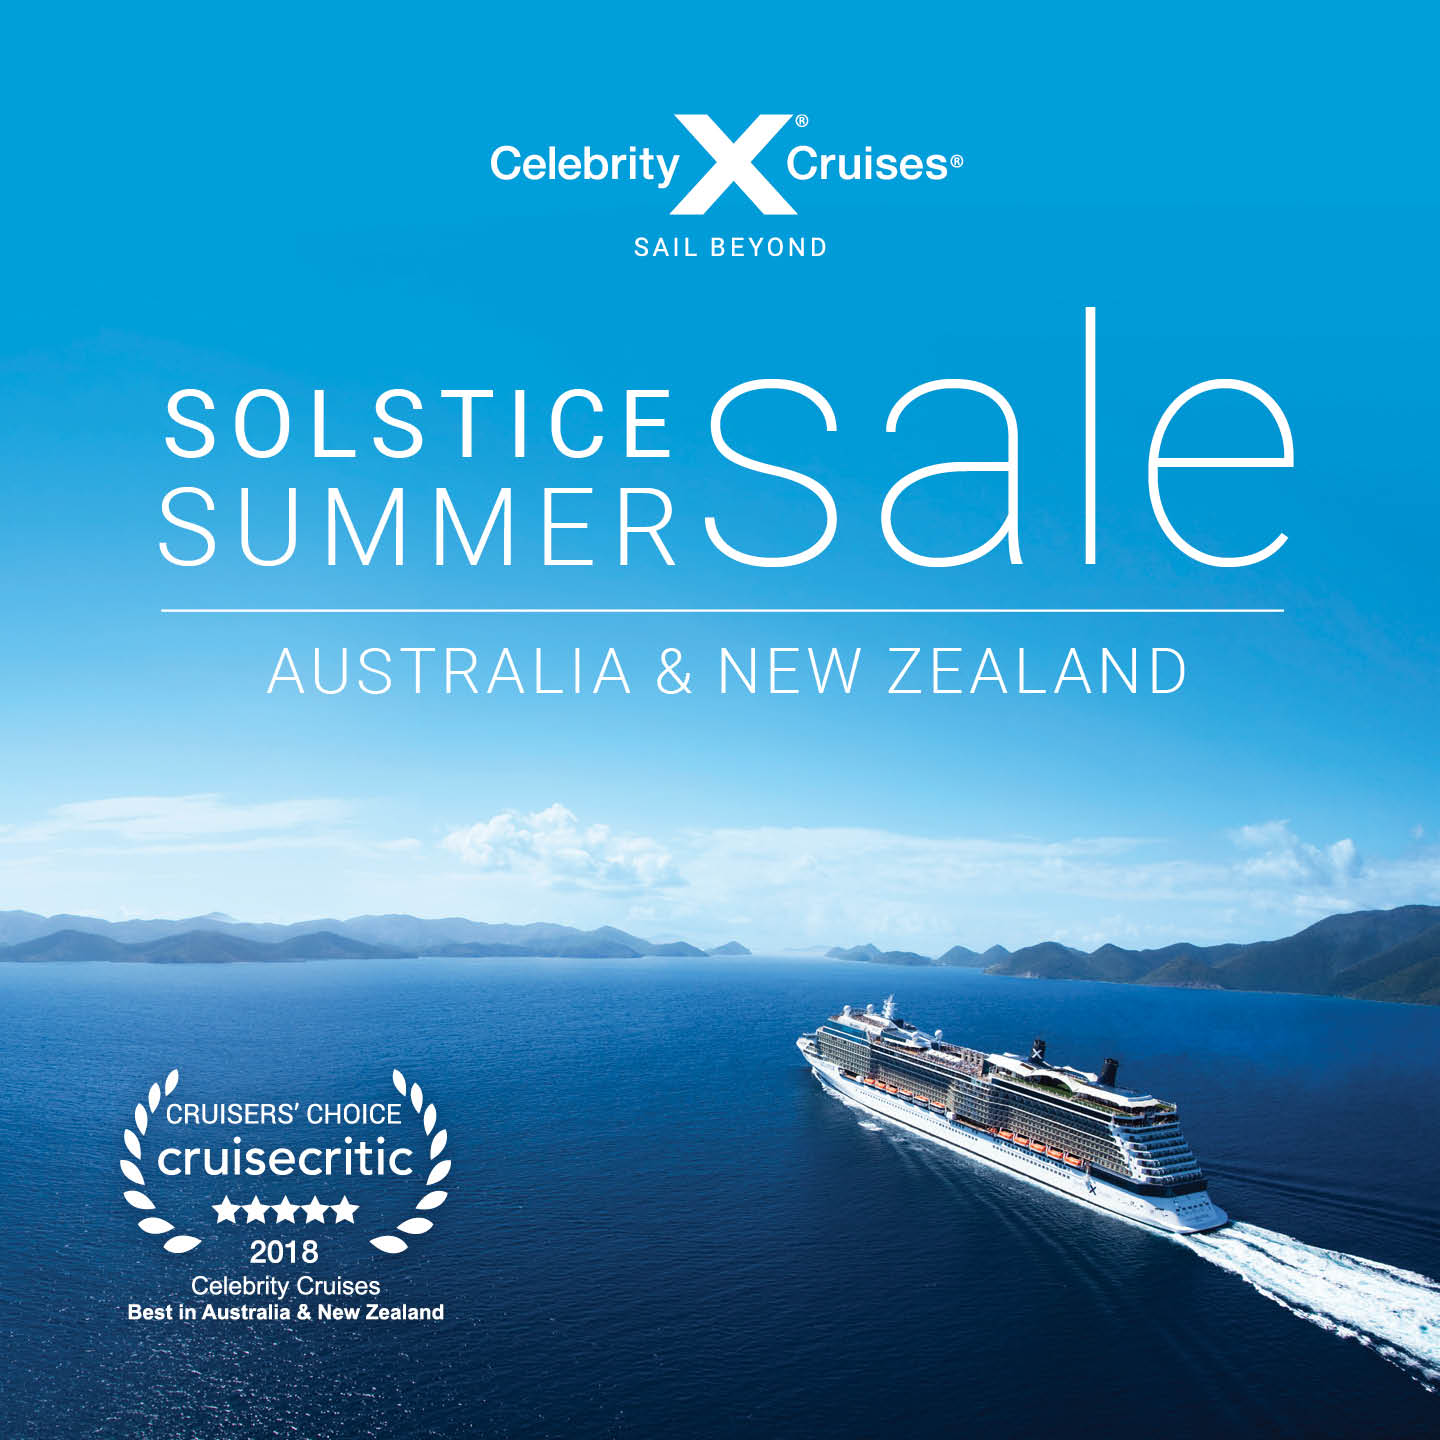 Last Minute Cruises on Celebrity Solstice Australia Cruise Offers